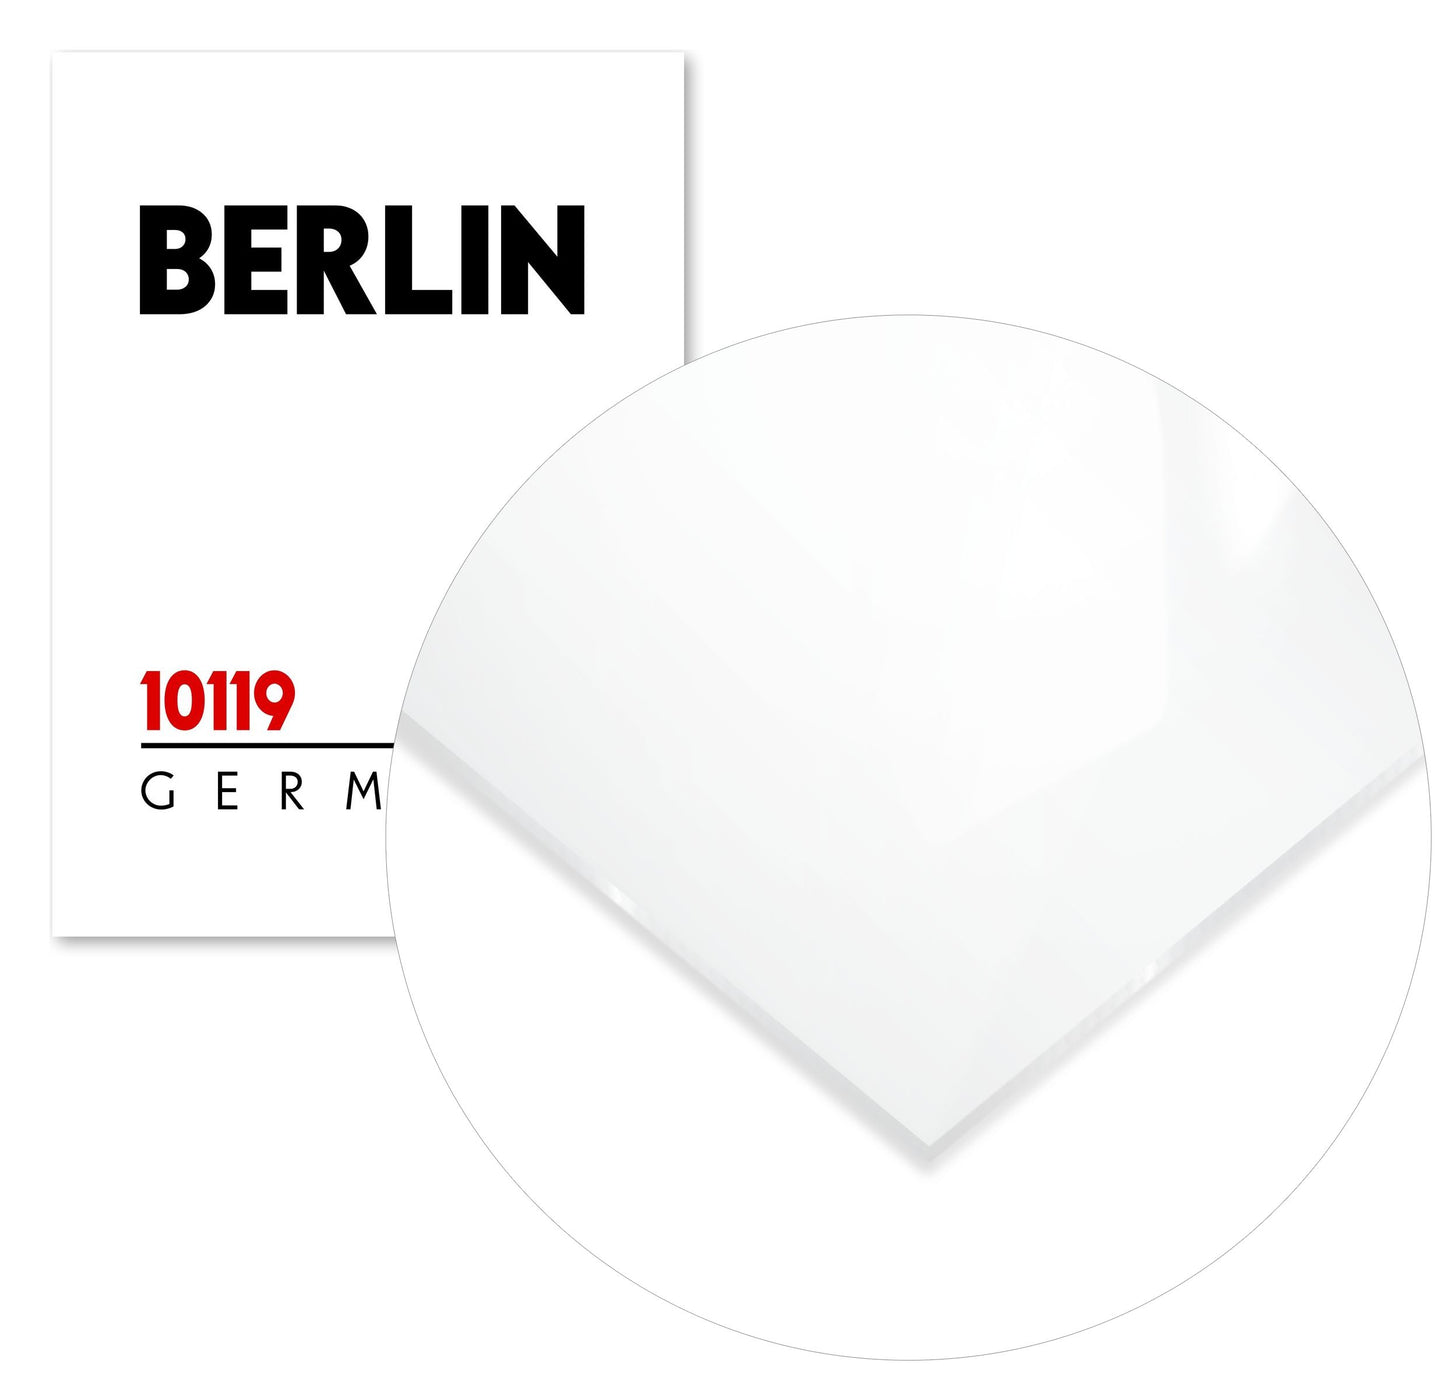 Berlin 10119 Postal Code - @VickyHanggara